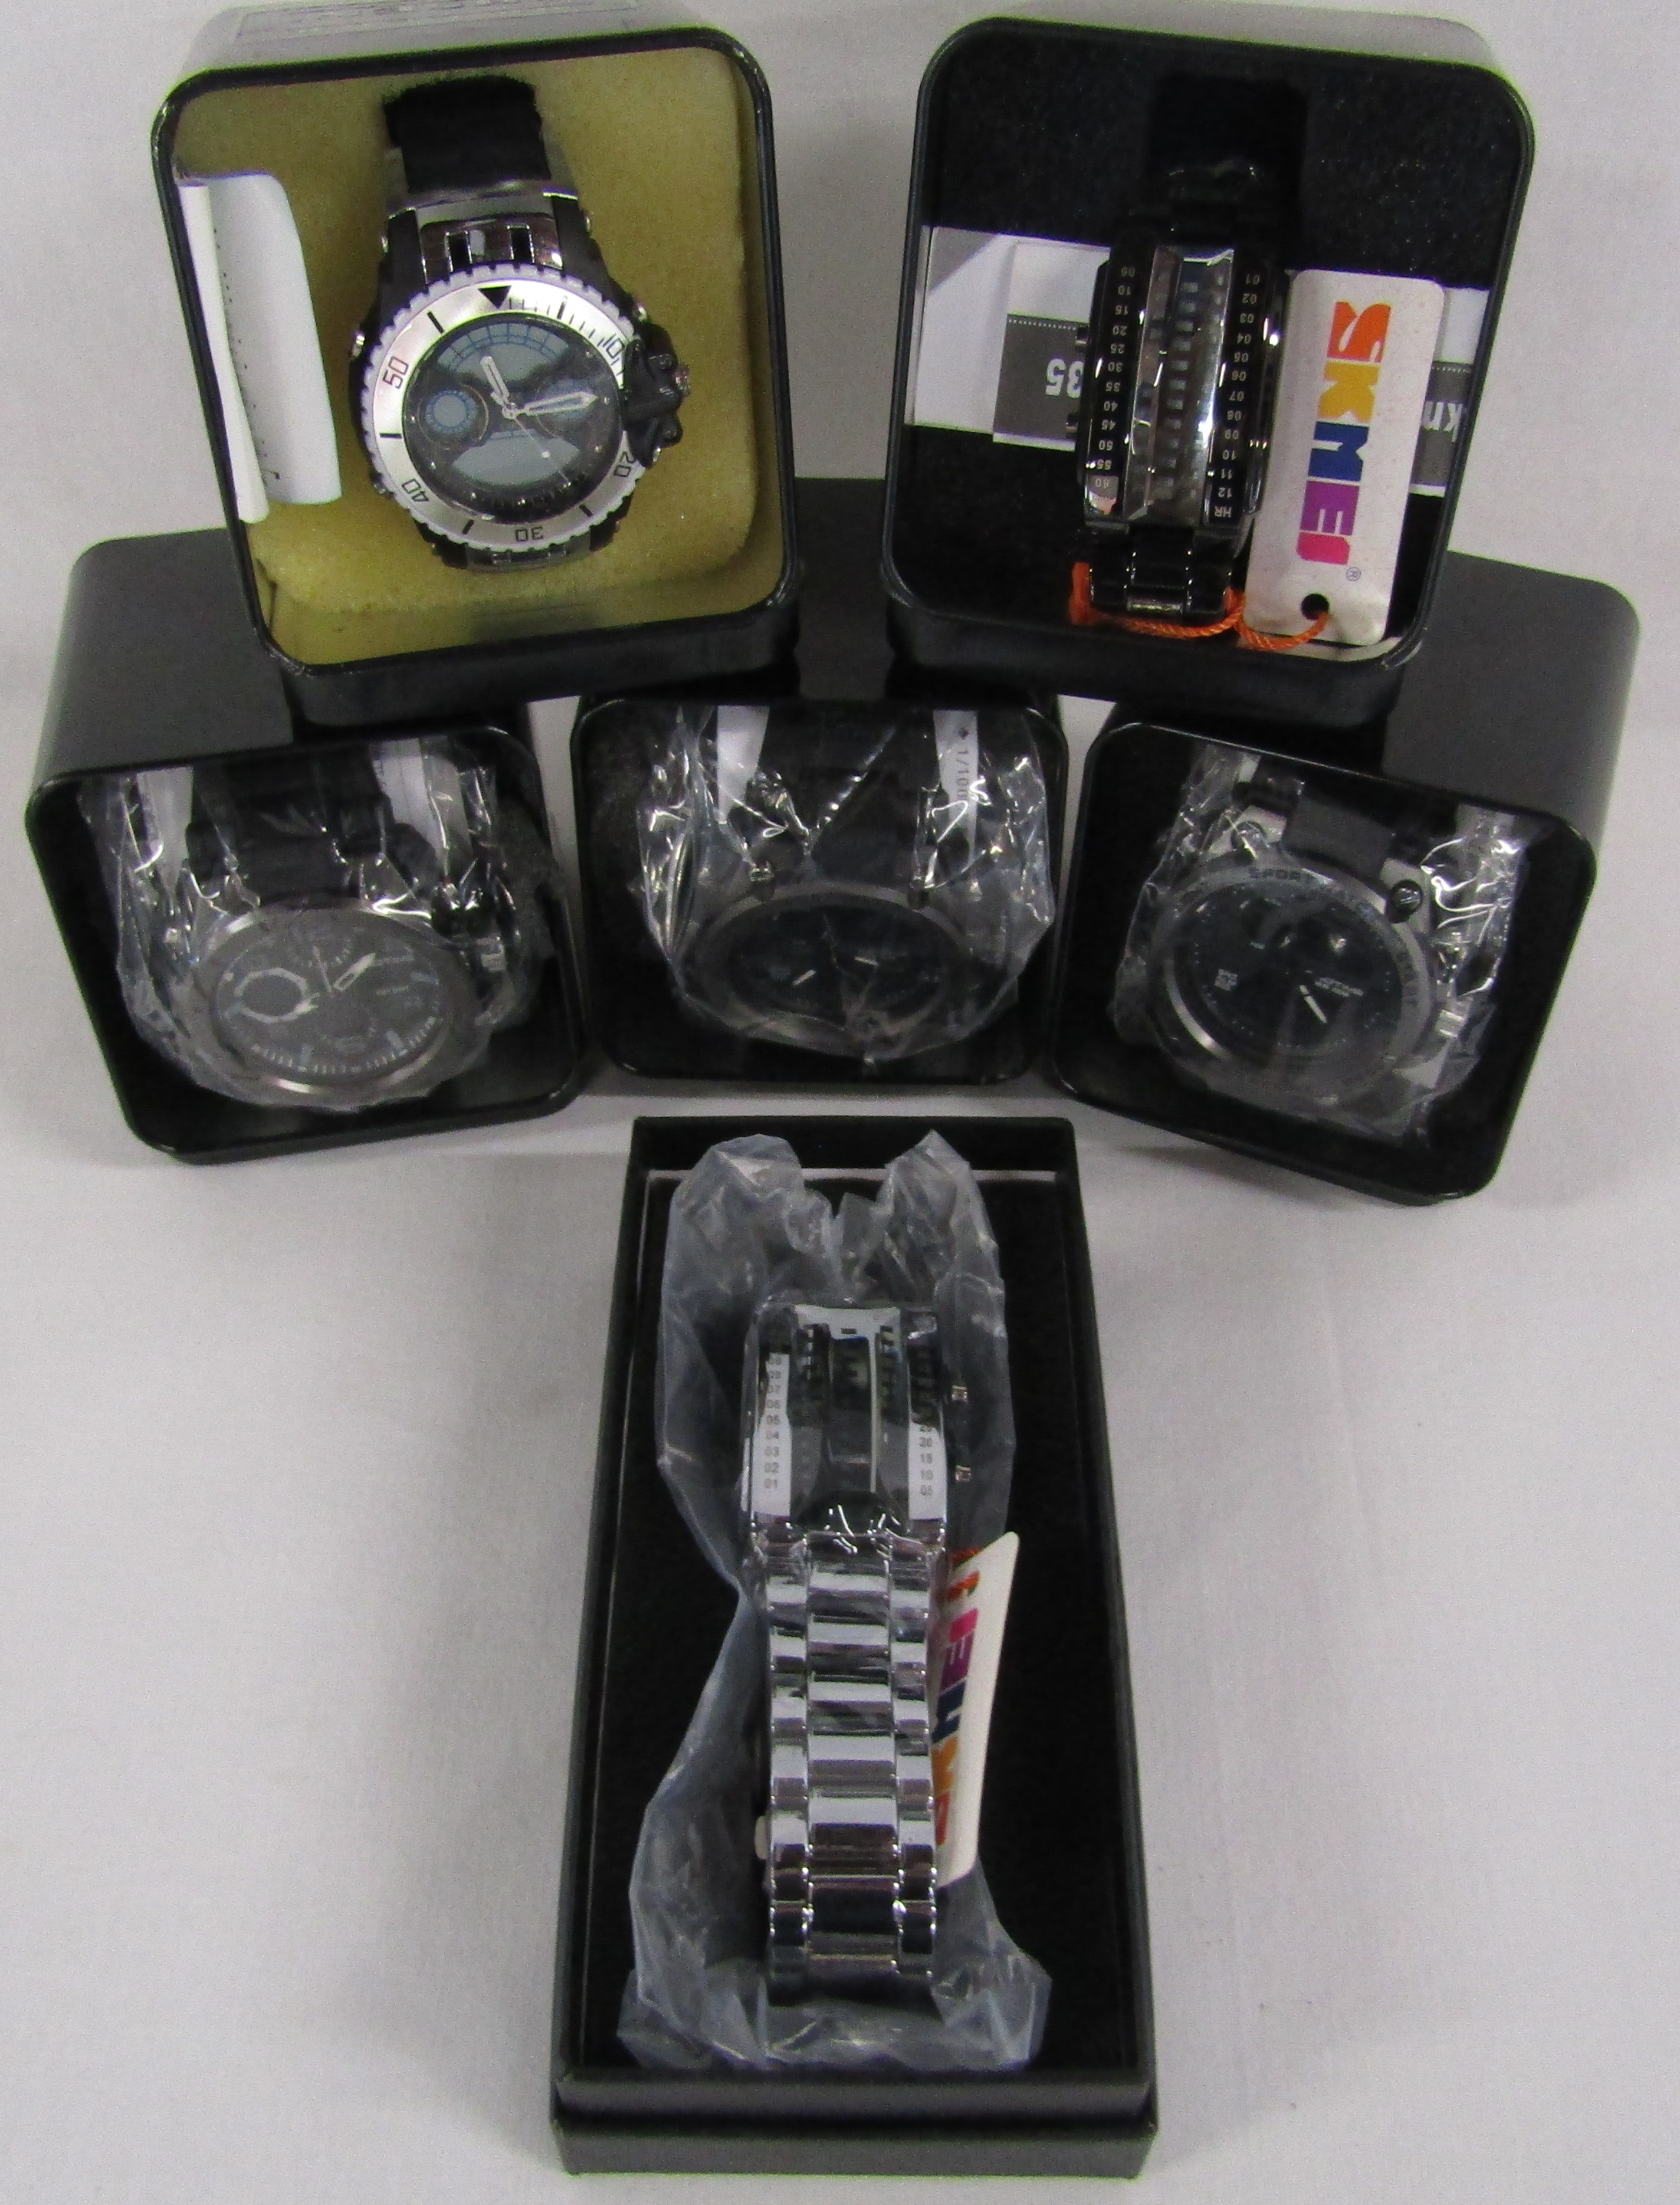 6 men's cased watches - 2 x Finotime 739 - Finotime 6008 - Ohsen AD603 - 2 x Skmei 1013